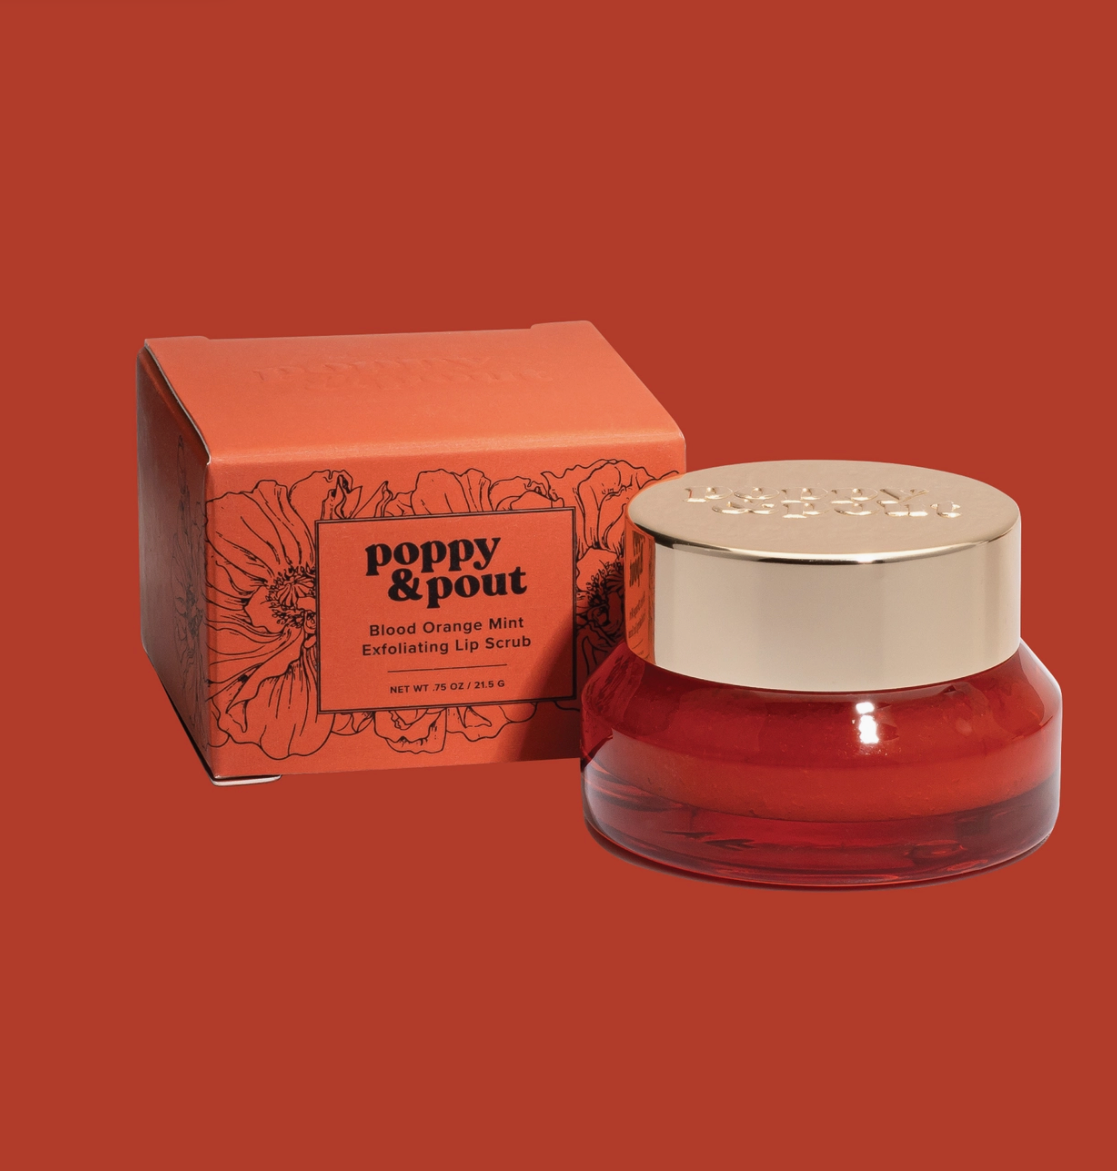 Poppy & Pout's Exfoliating Lip Scrubs Peach